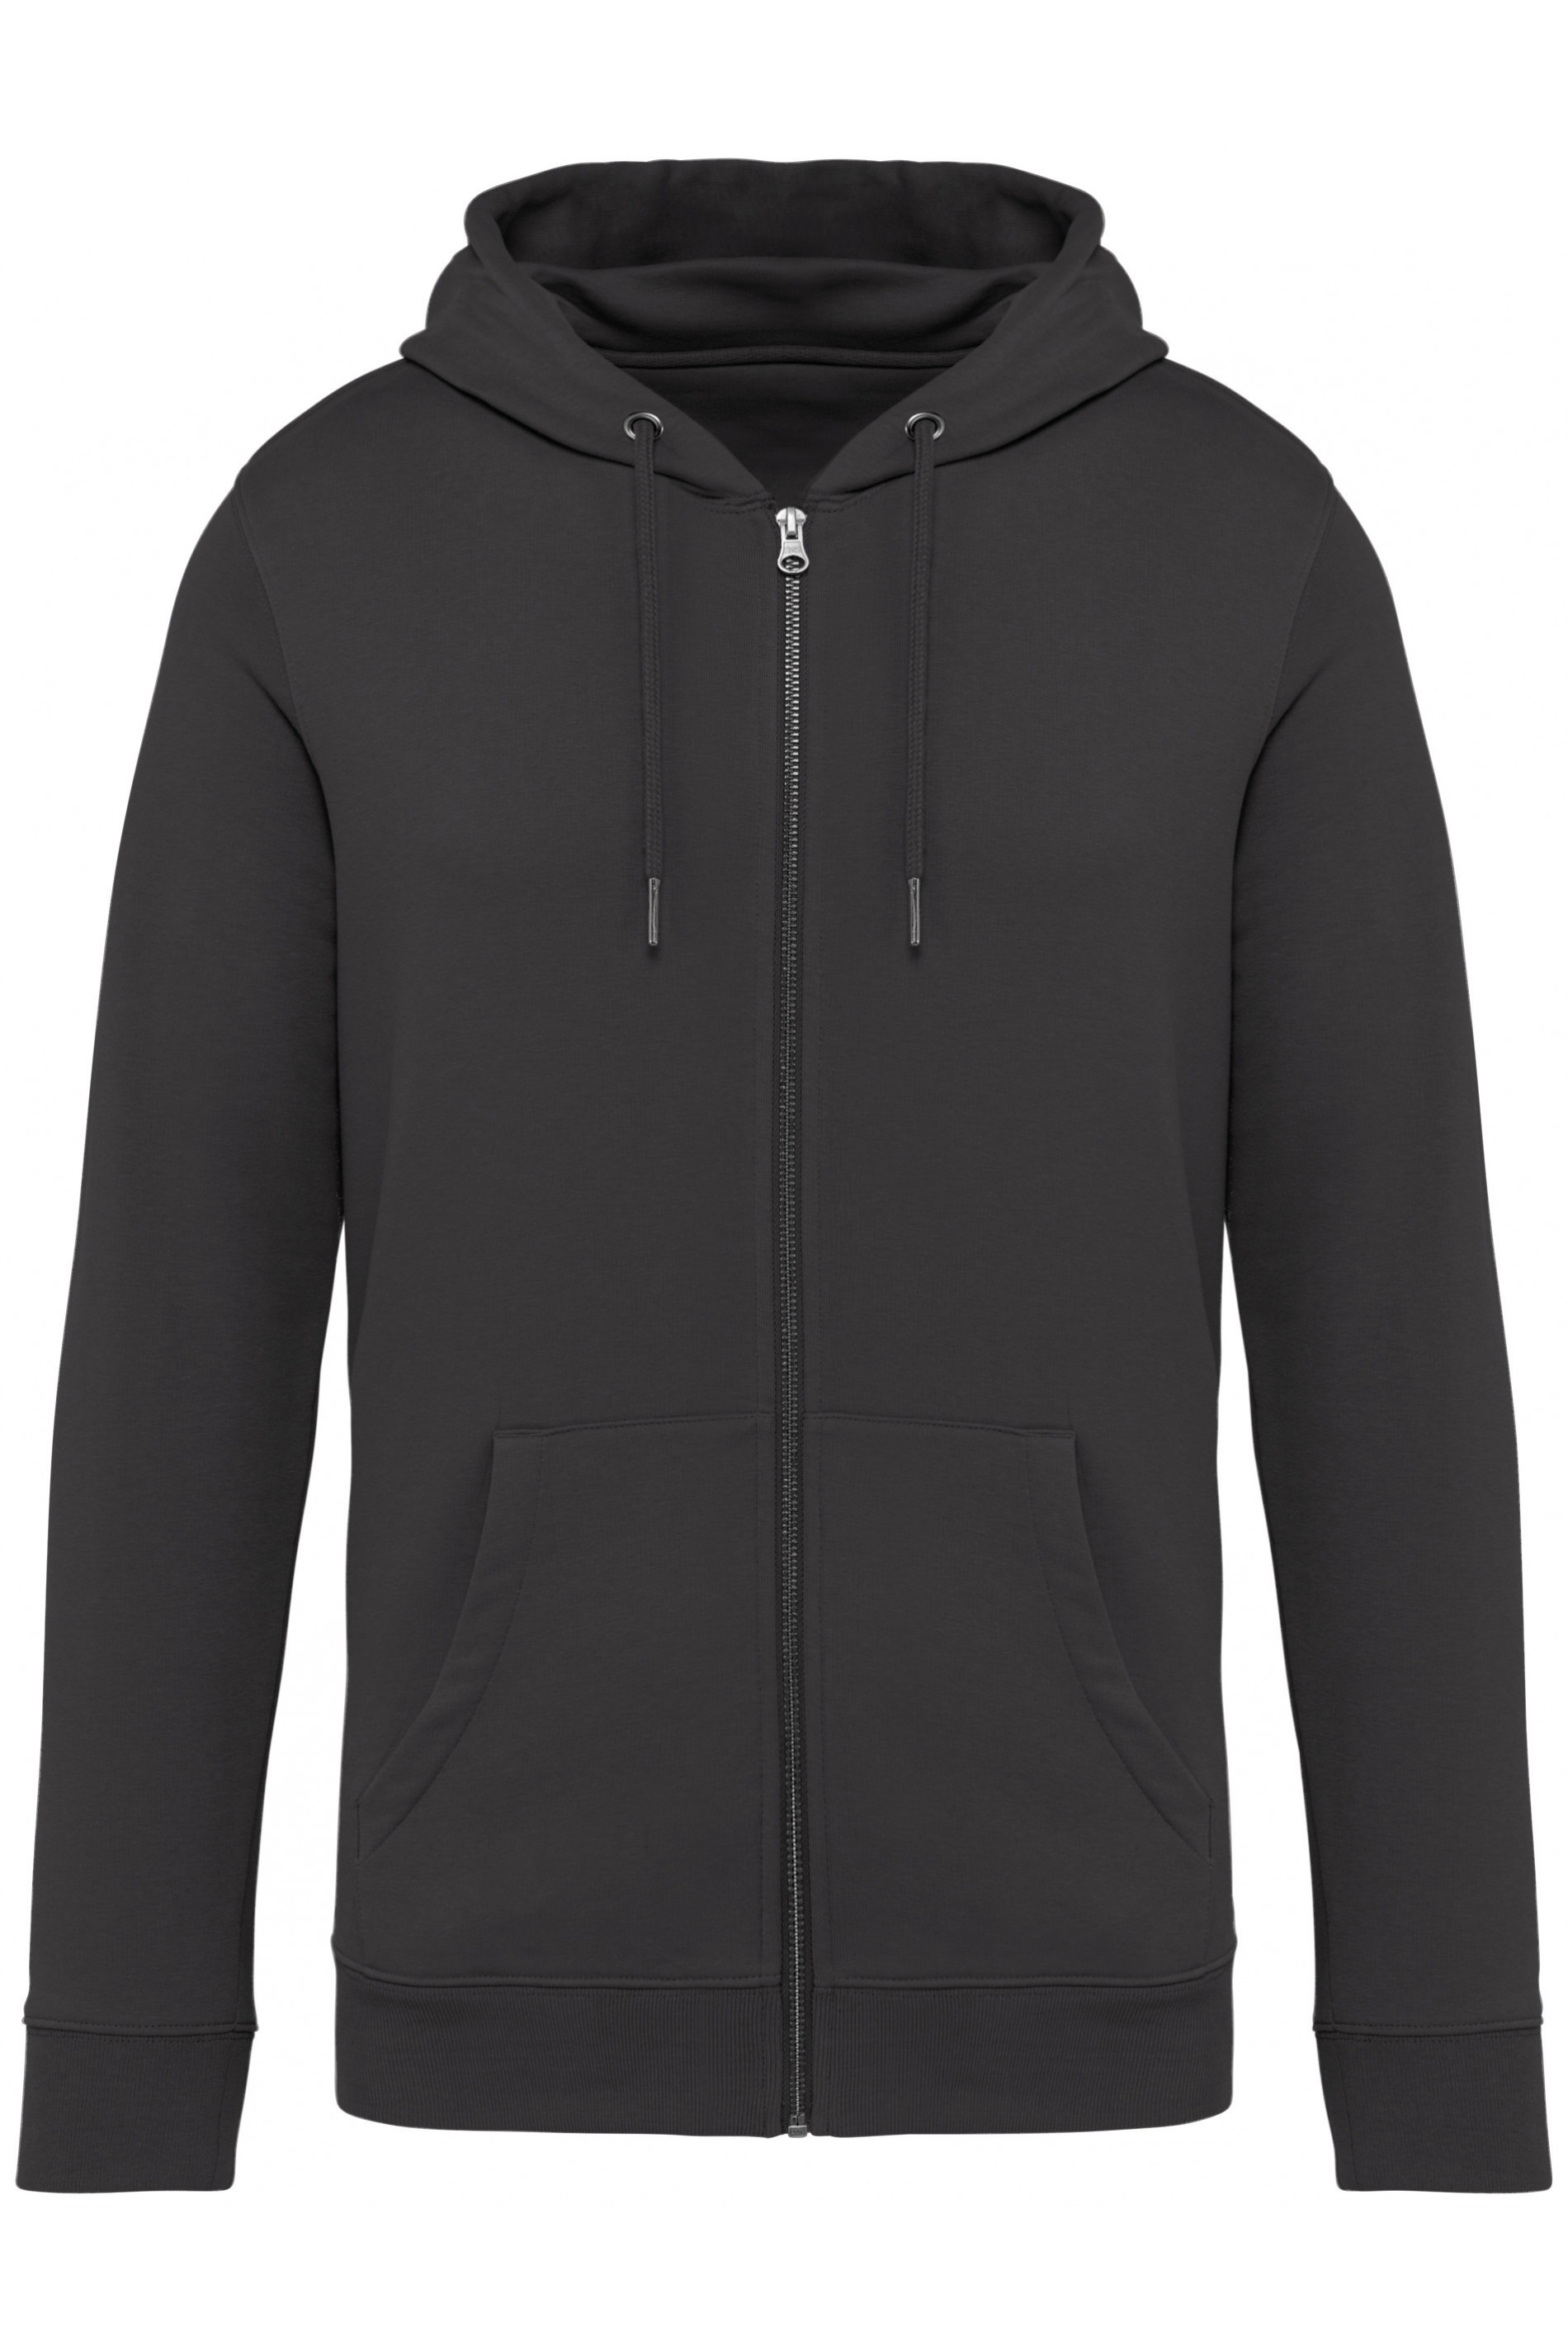 Unisex organic cotton hoodie jacket 350 g/m² Iron Grey 3XL